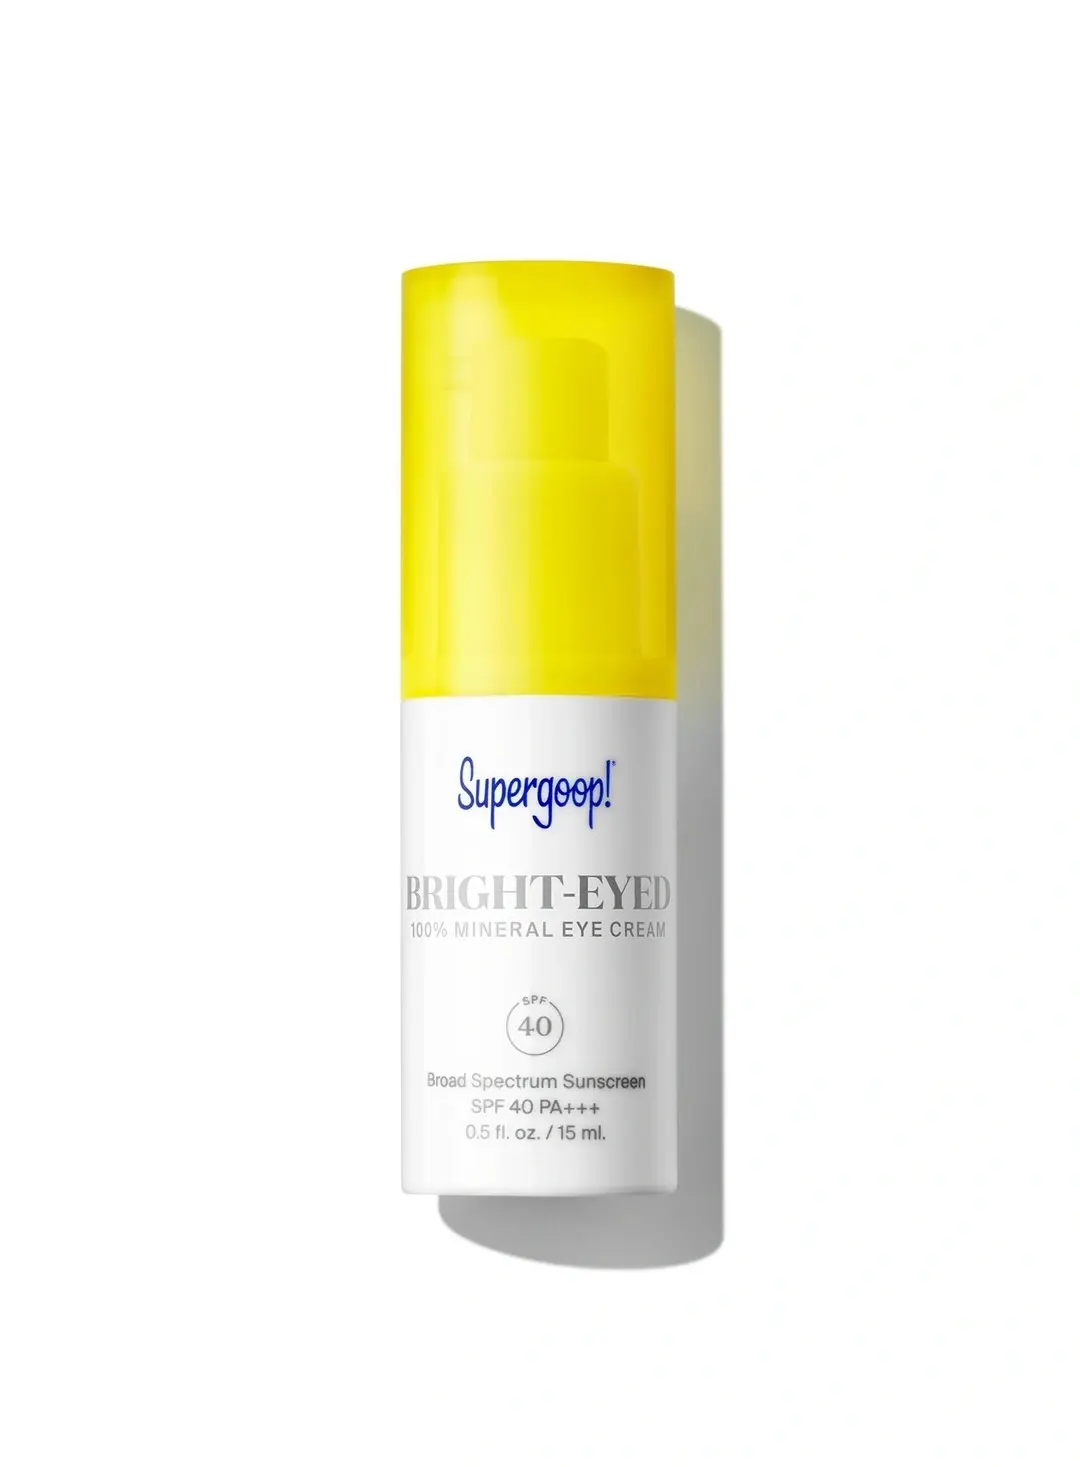 Supergoop! Bright-Eyed 100% Mineral Eye Cream